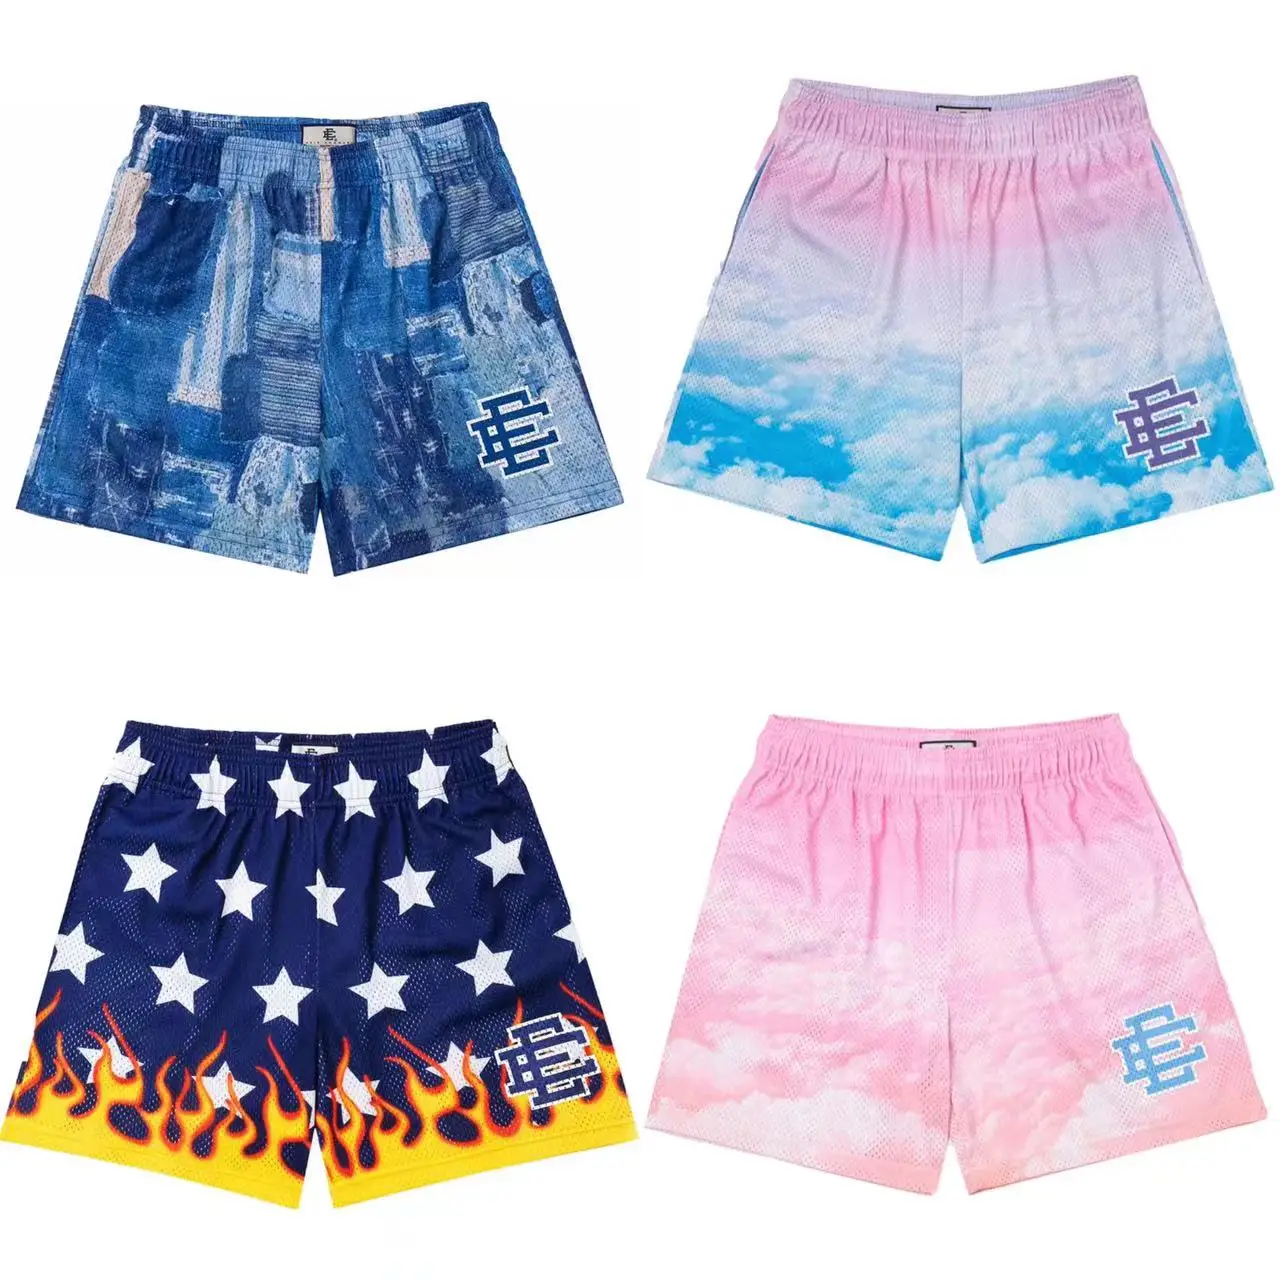 

New style Eric Emanuel Summer Men Shorts Casual Shorts Fitness Exercise Shorts Breathable Mesh Shorts Jogger Men's EE shorts